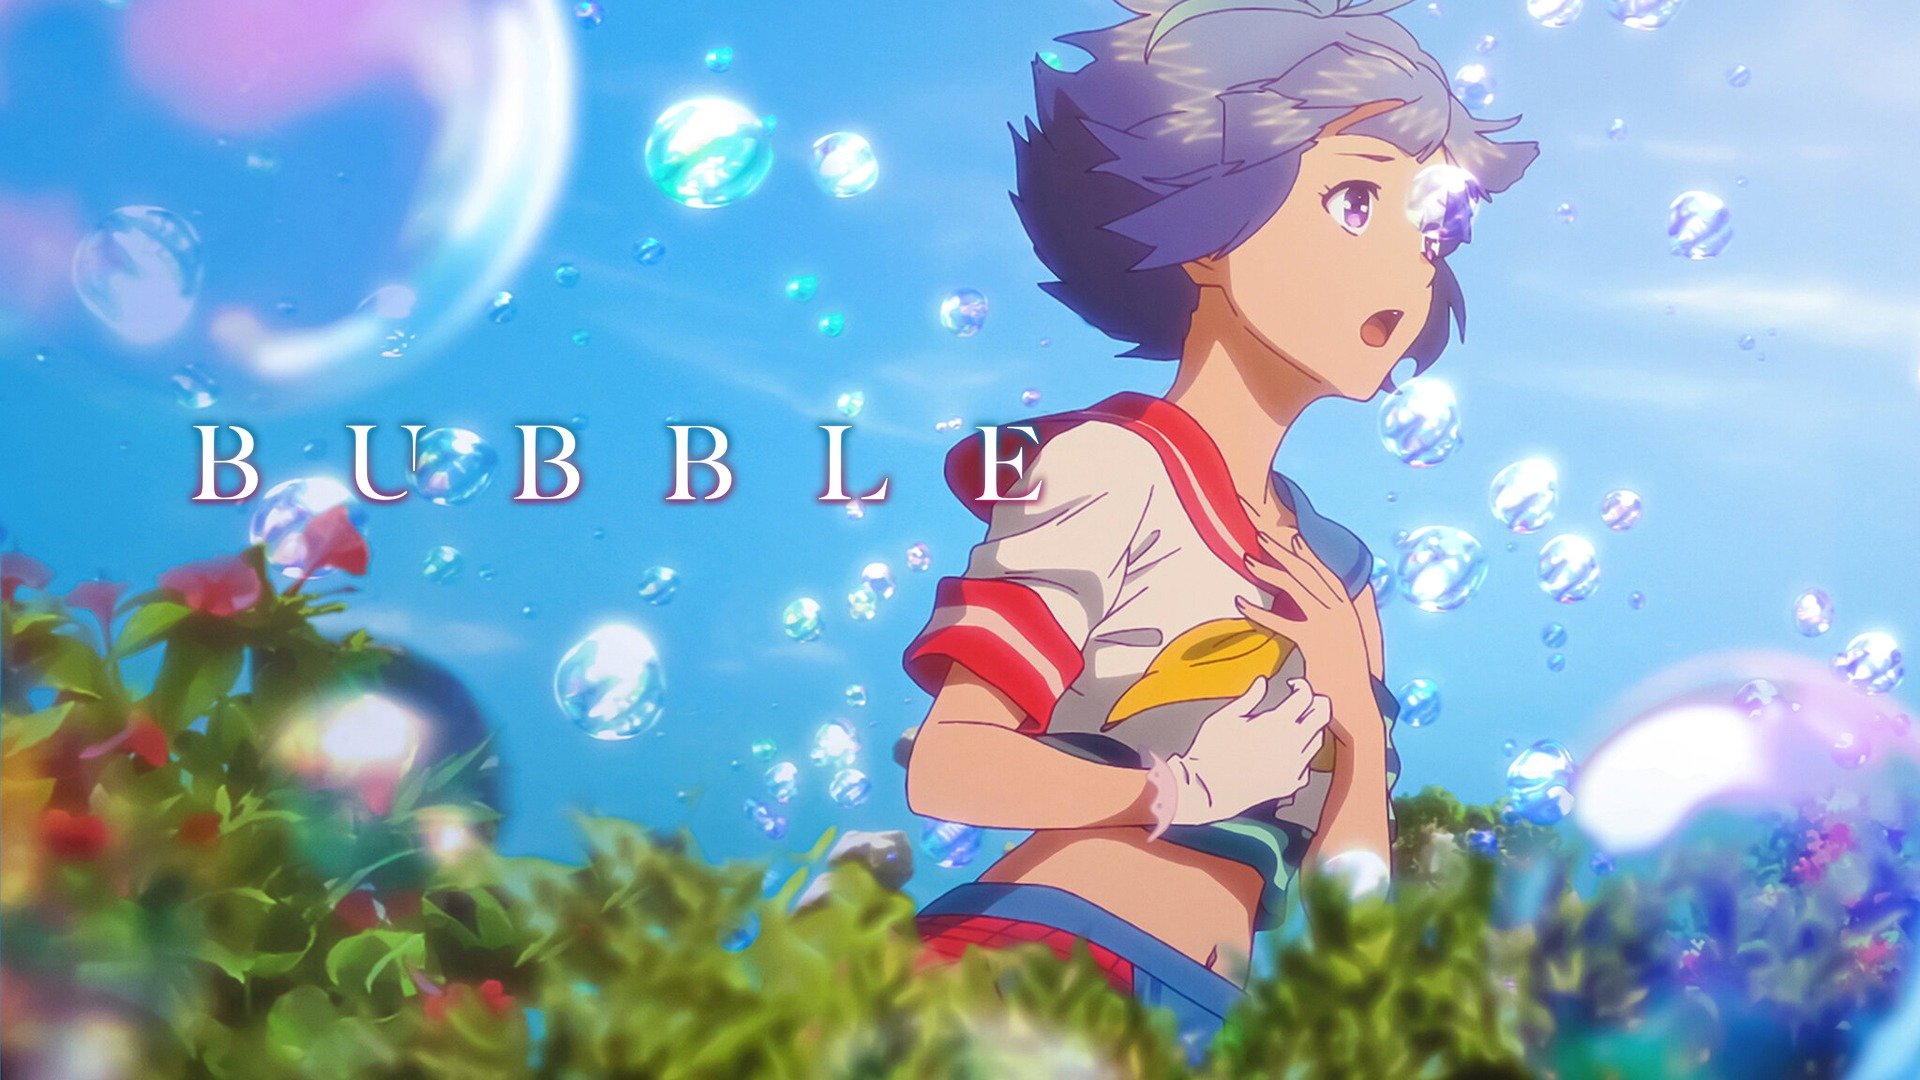 Bubble | Official Trailer | Netflix Anime - YouTube